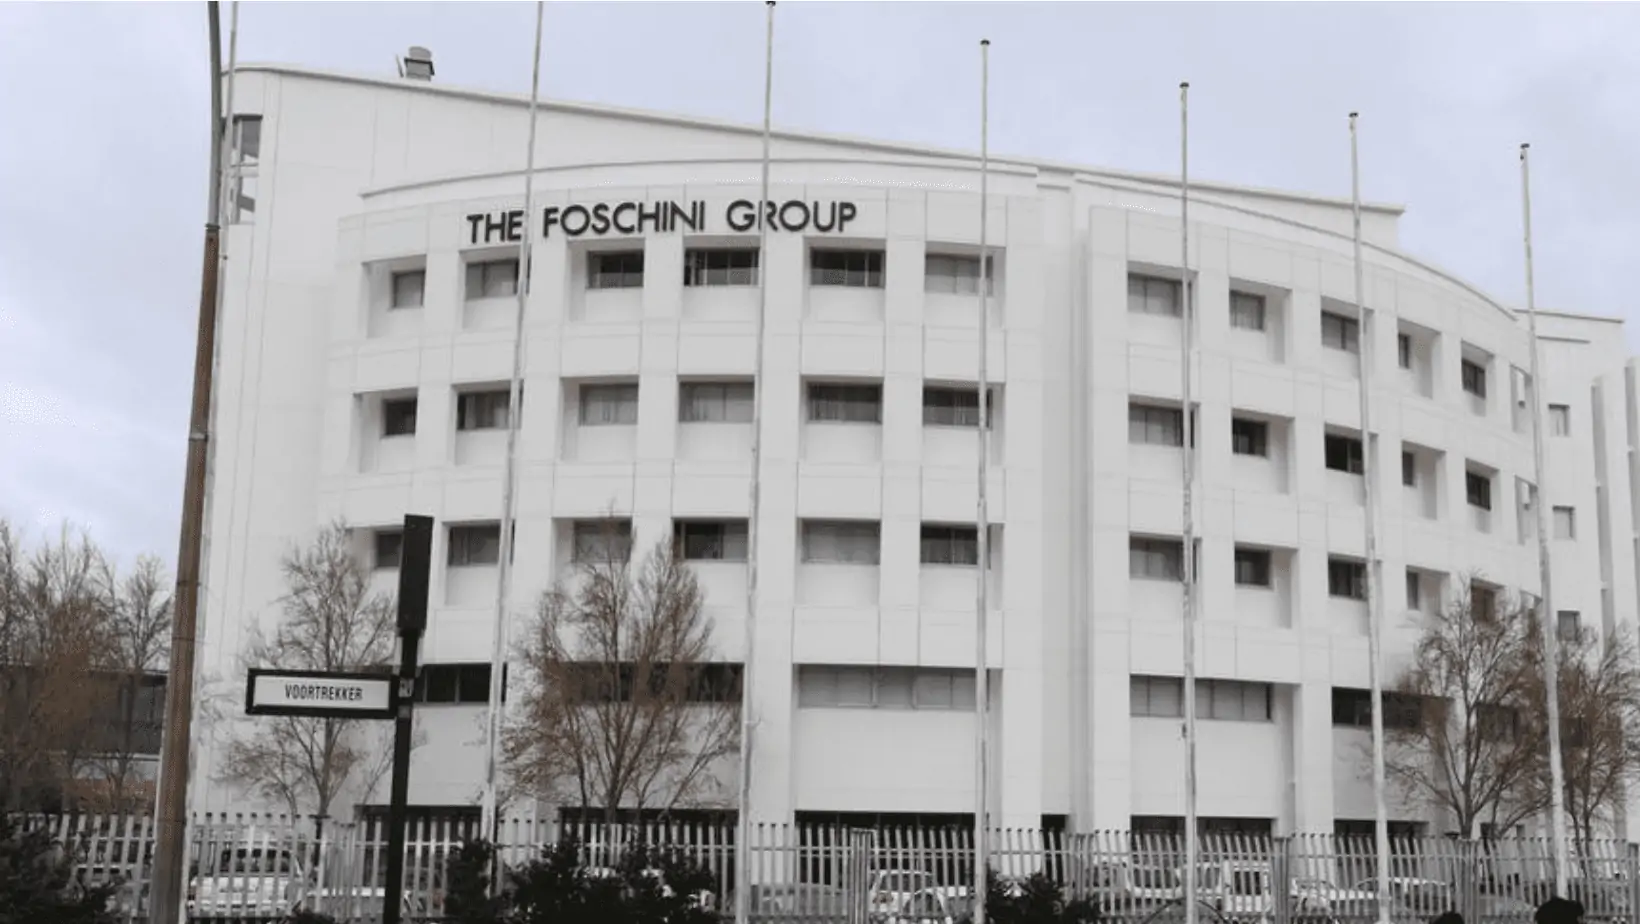 The Foschini Group